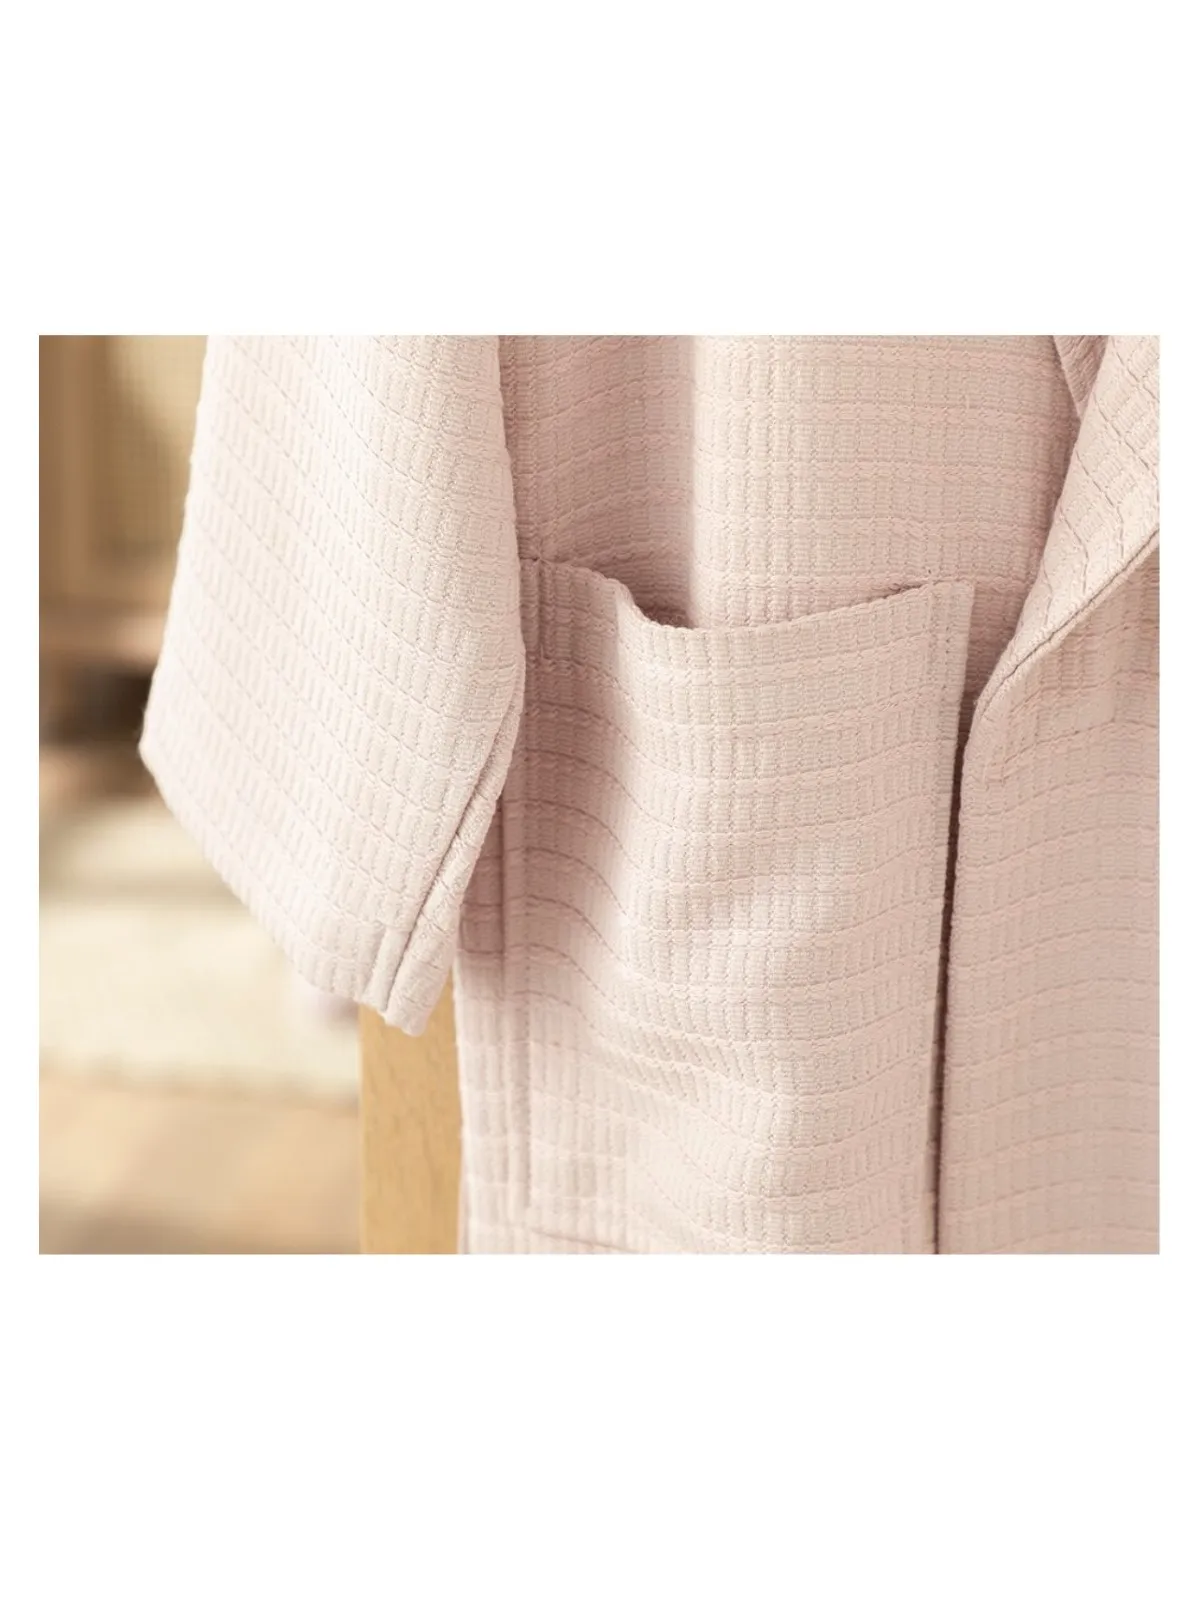 English Home Fresh Touch Pique Bathrobe Towel White Pink Beige Blue Black Stripe Pattern Stylish Design Bathrobe